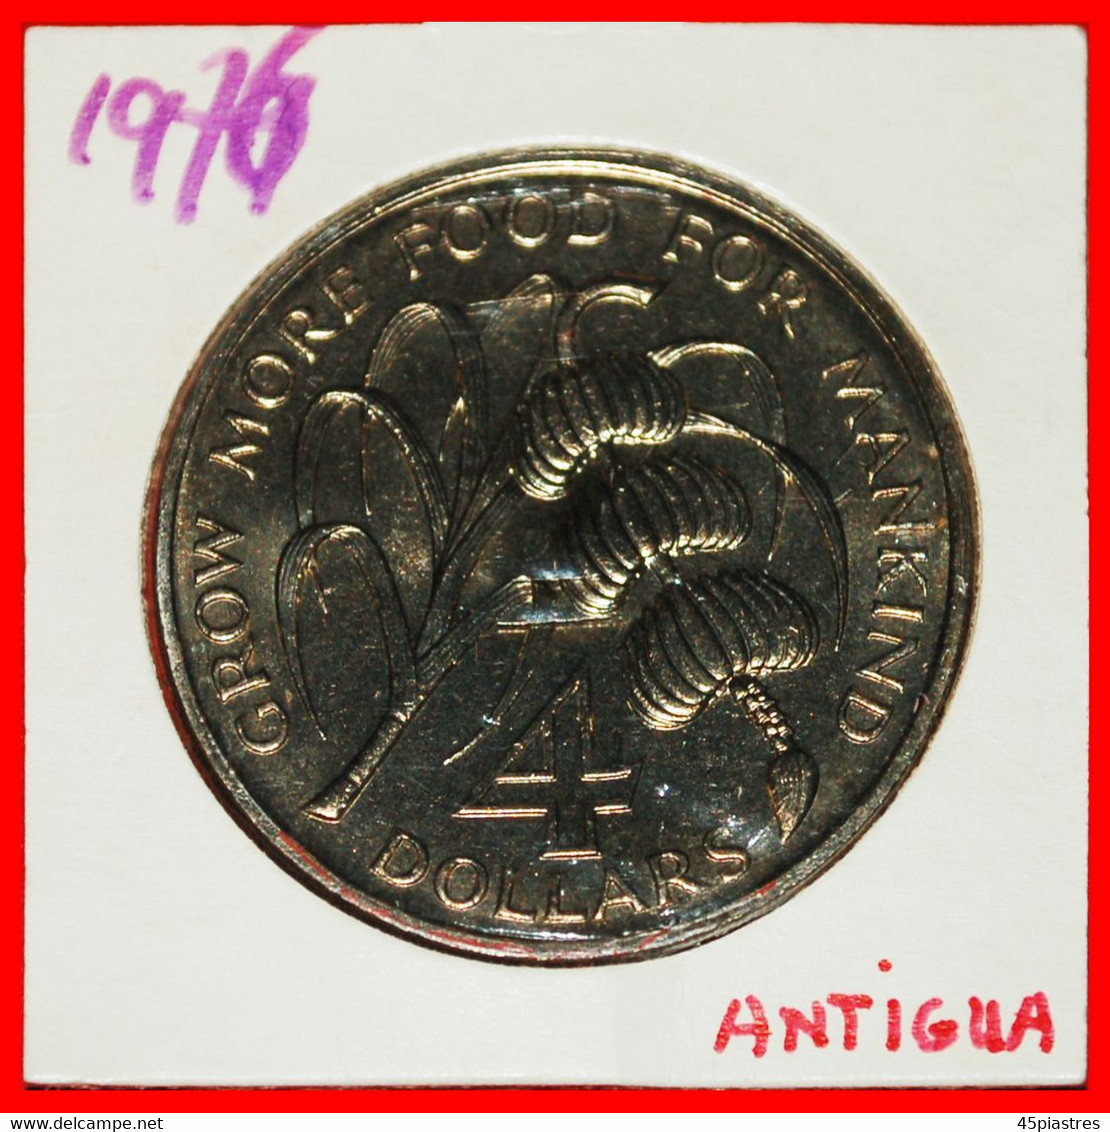 * GREAT BRITAIN FAO: ANTIGUA AND BARBUDA ★ 4 DOLLARS 1970 PROOF! RARE! ★LOW START ★ NO RESERVE! - Antigua Y Barbuda